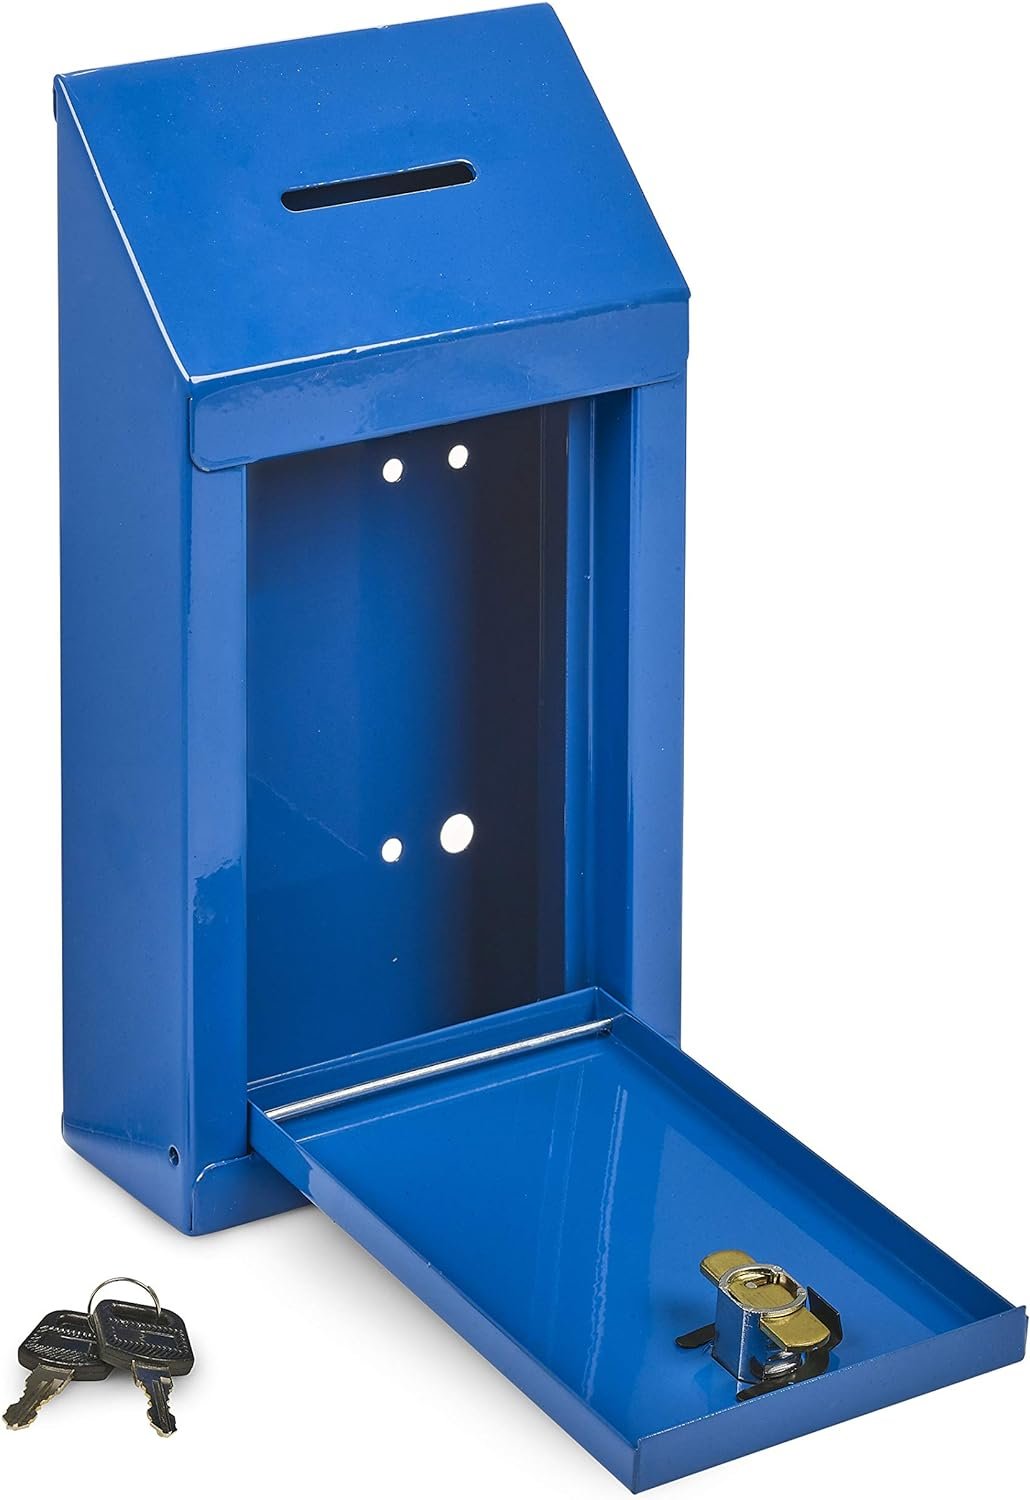 Blue Metal Donation Box Review